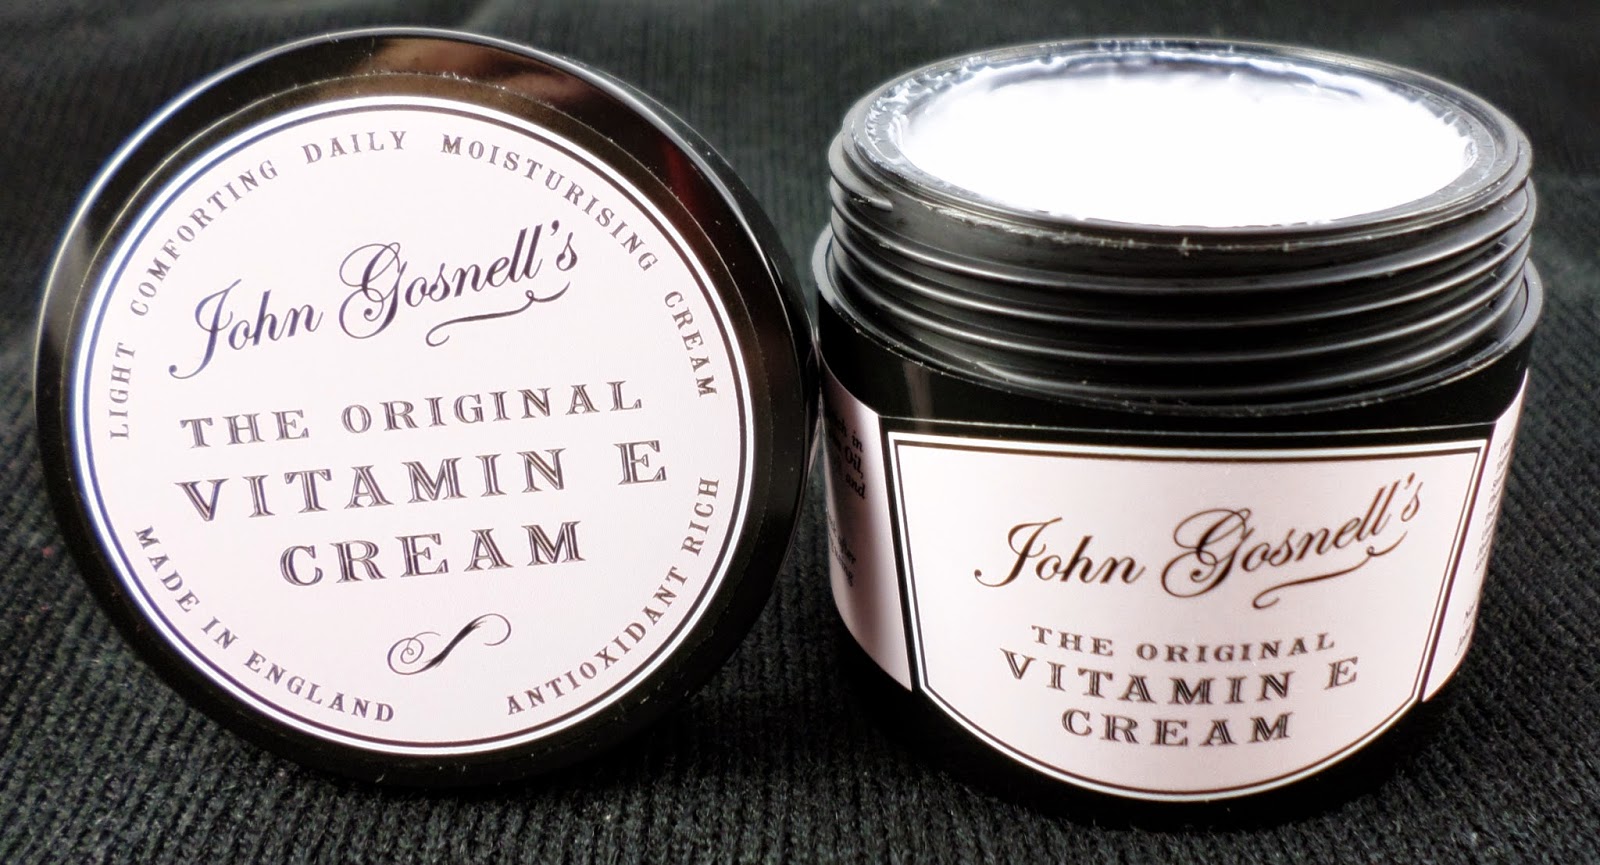 John Gosnell's Original Vitamin E Cream Review